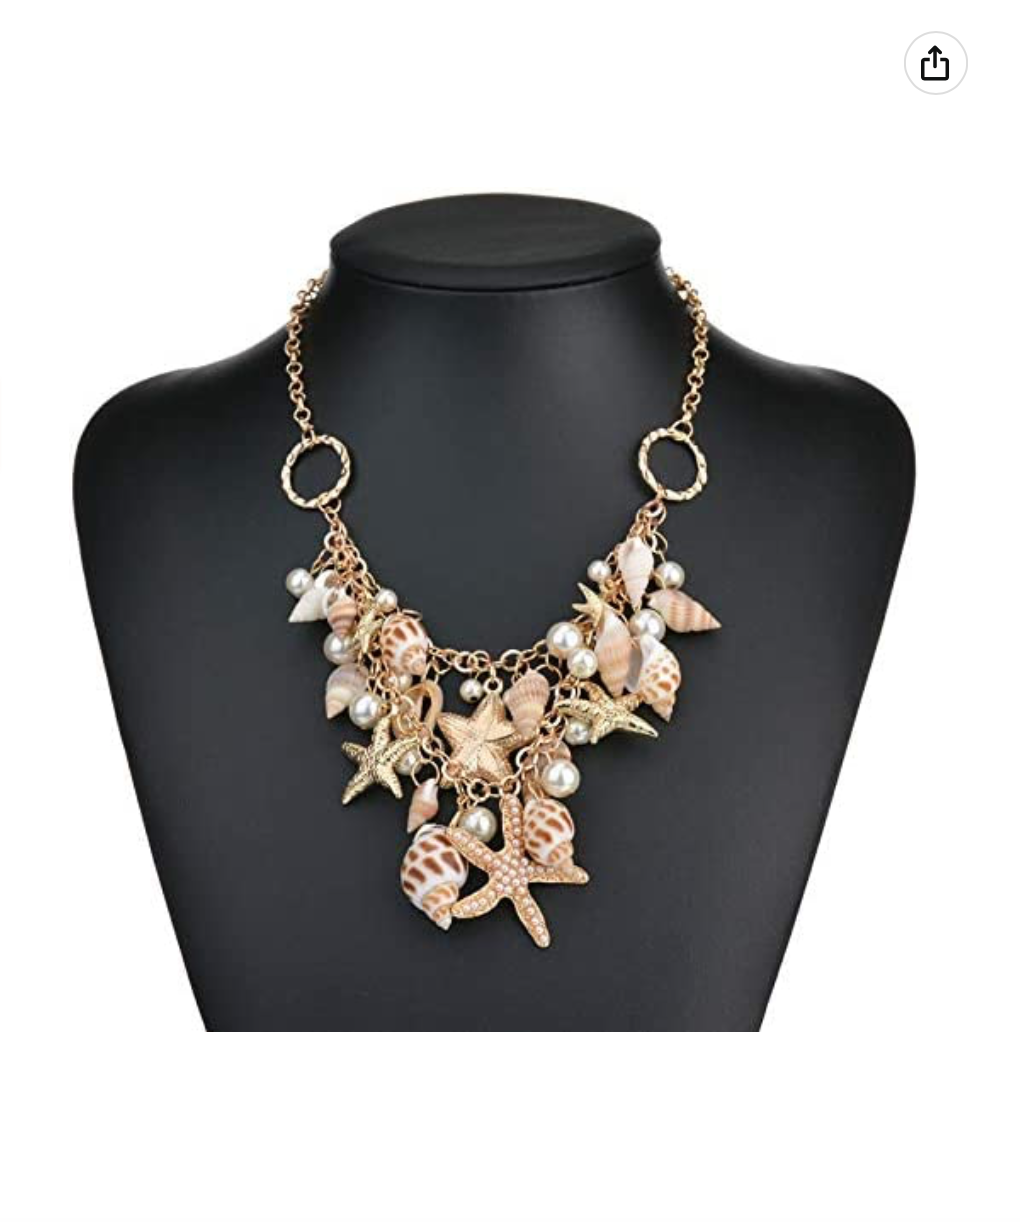 Starfish Seashell Necklace Collar Bib Pendant Star Fish Sea Shell Jewelry Birthday Gift 925